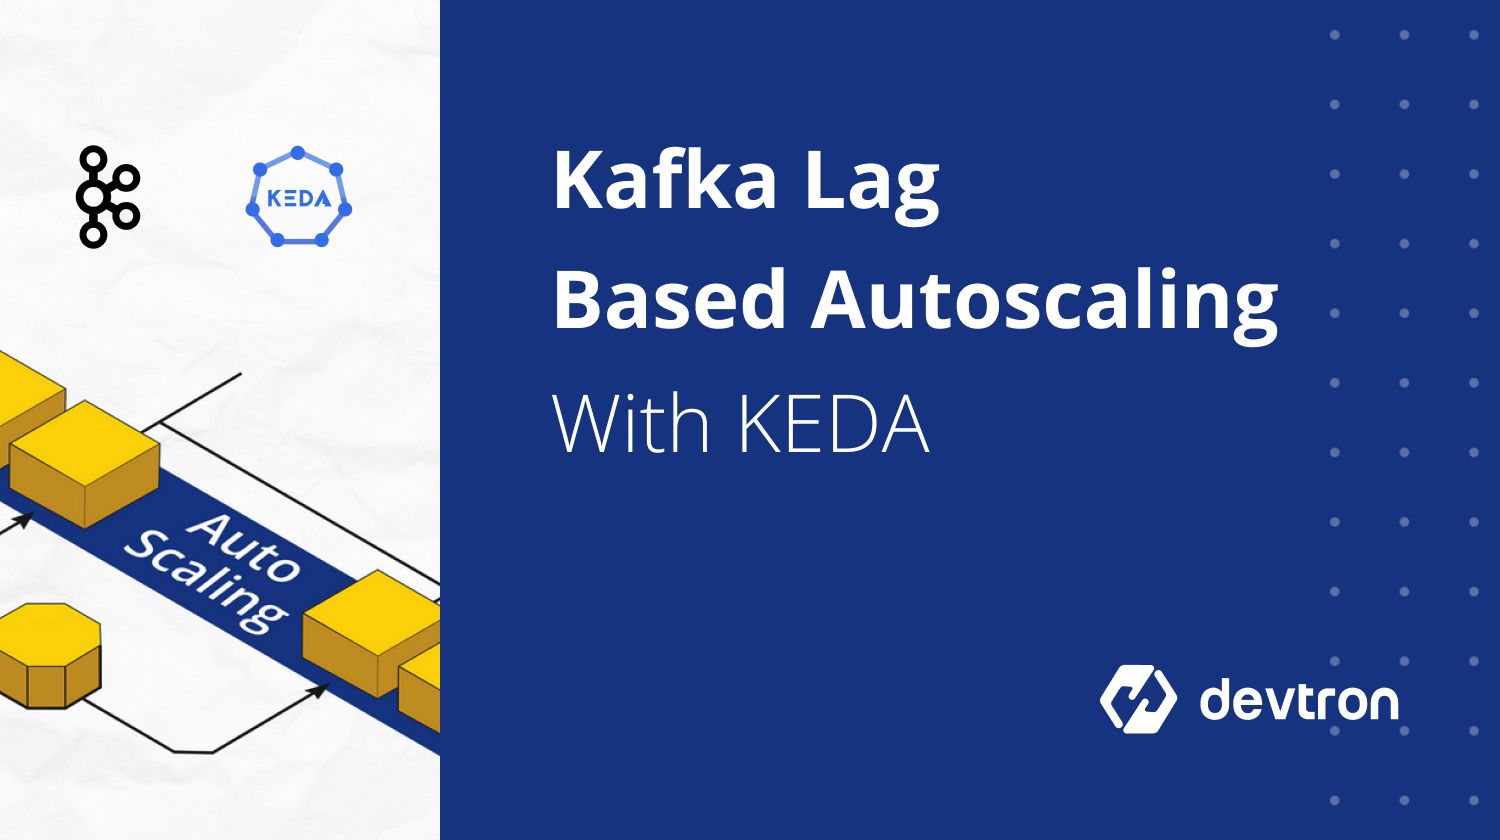 Autoscaling Using KEDA Based On Kafka Lag